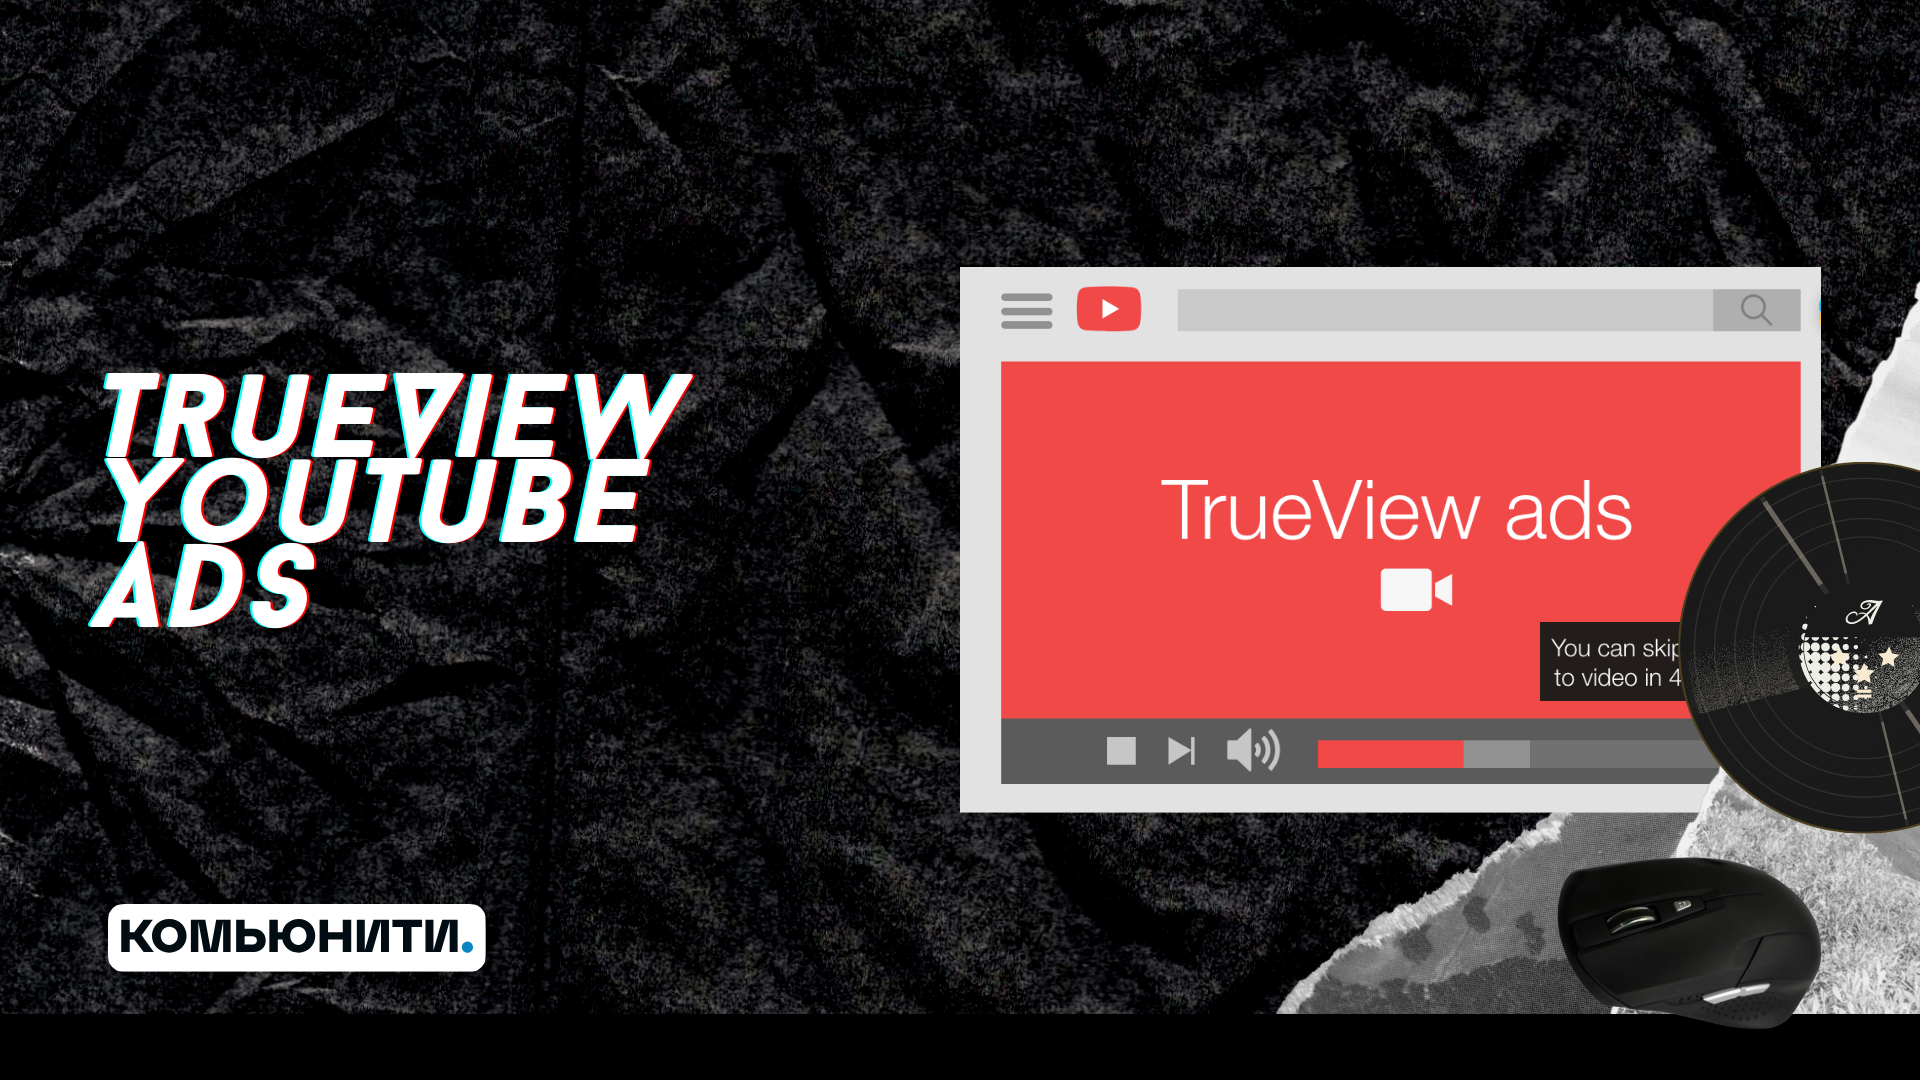 Tueview youtube